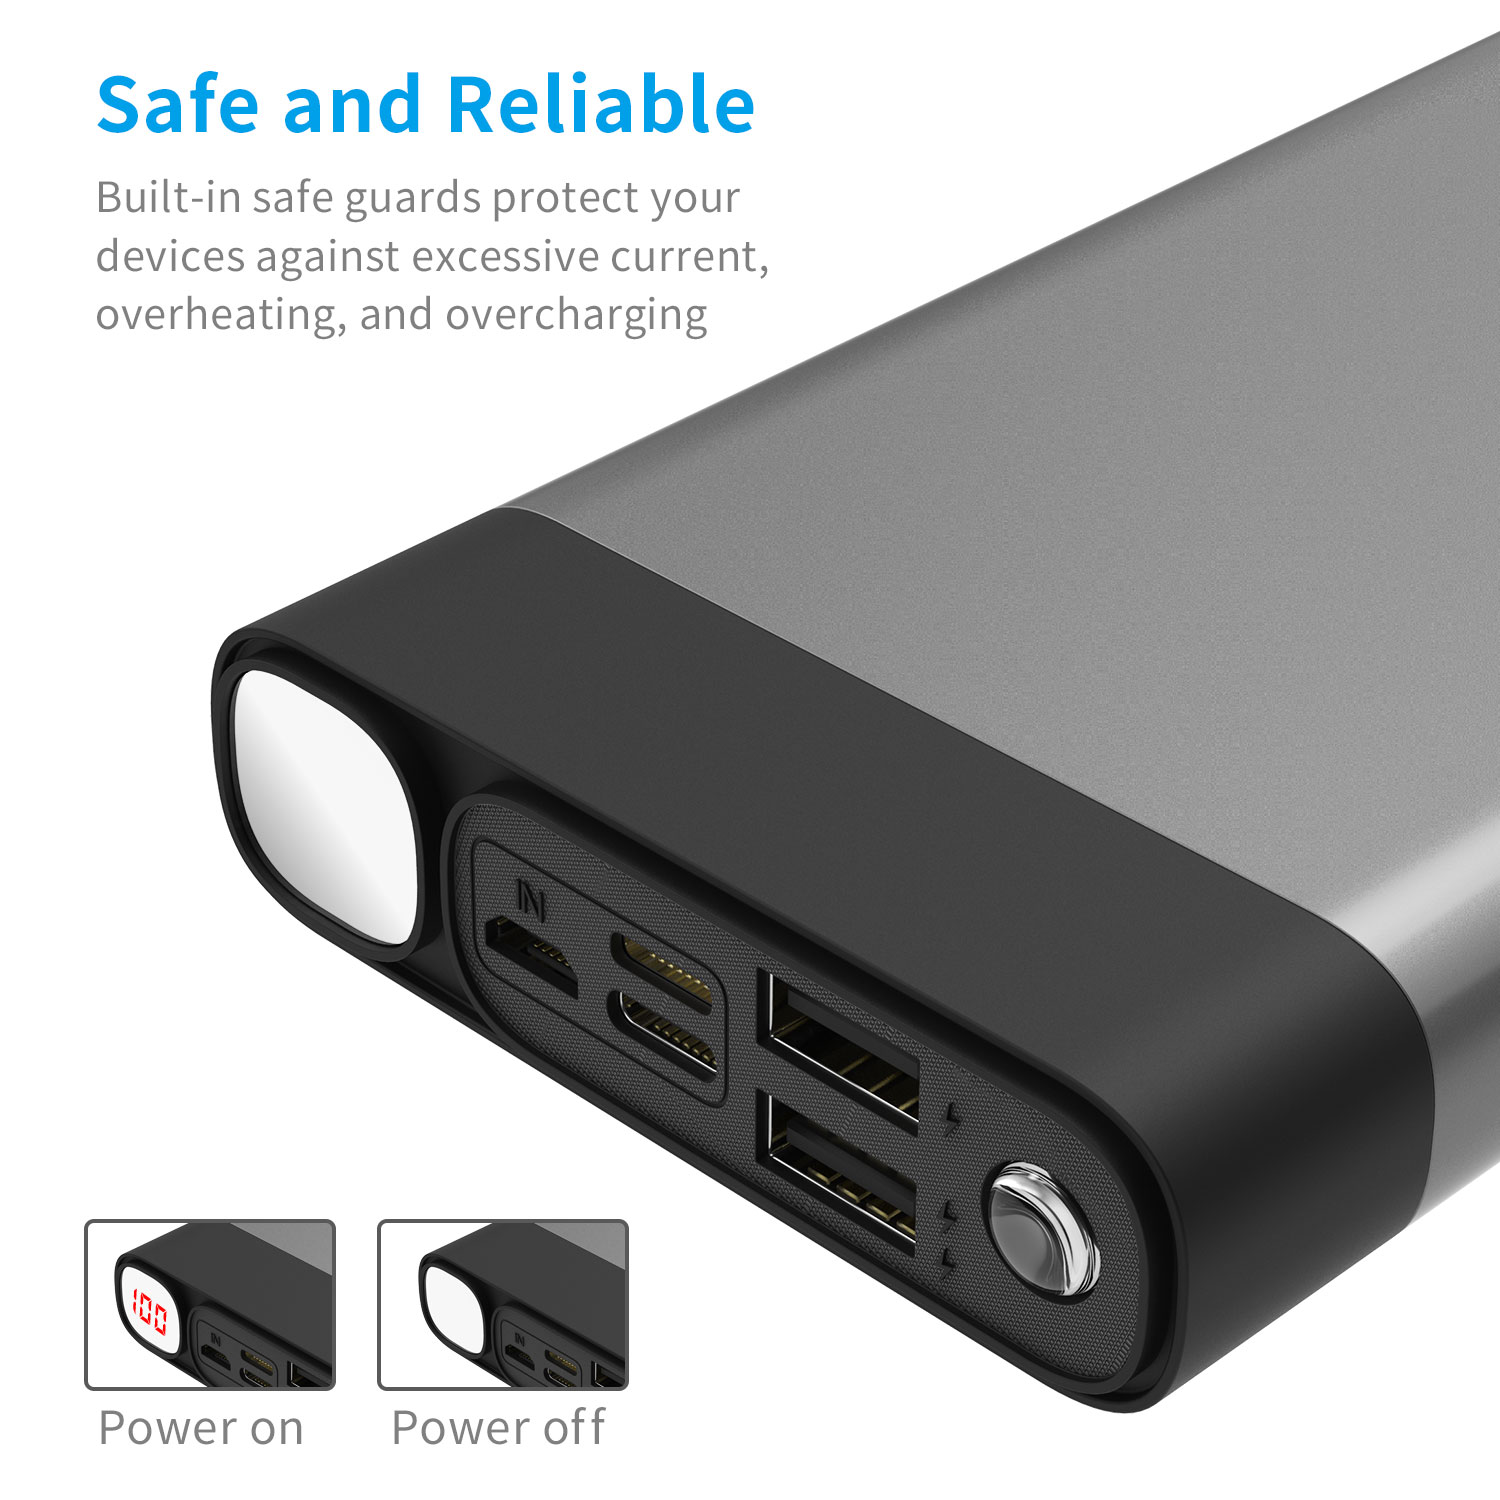 Portable Charger 27000mAh 2USB Ports / Bright Flashlight / Portable Charger fast charge Phone Pad (Please Remove the Display Protective Film) (Gray 27000mAh)